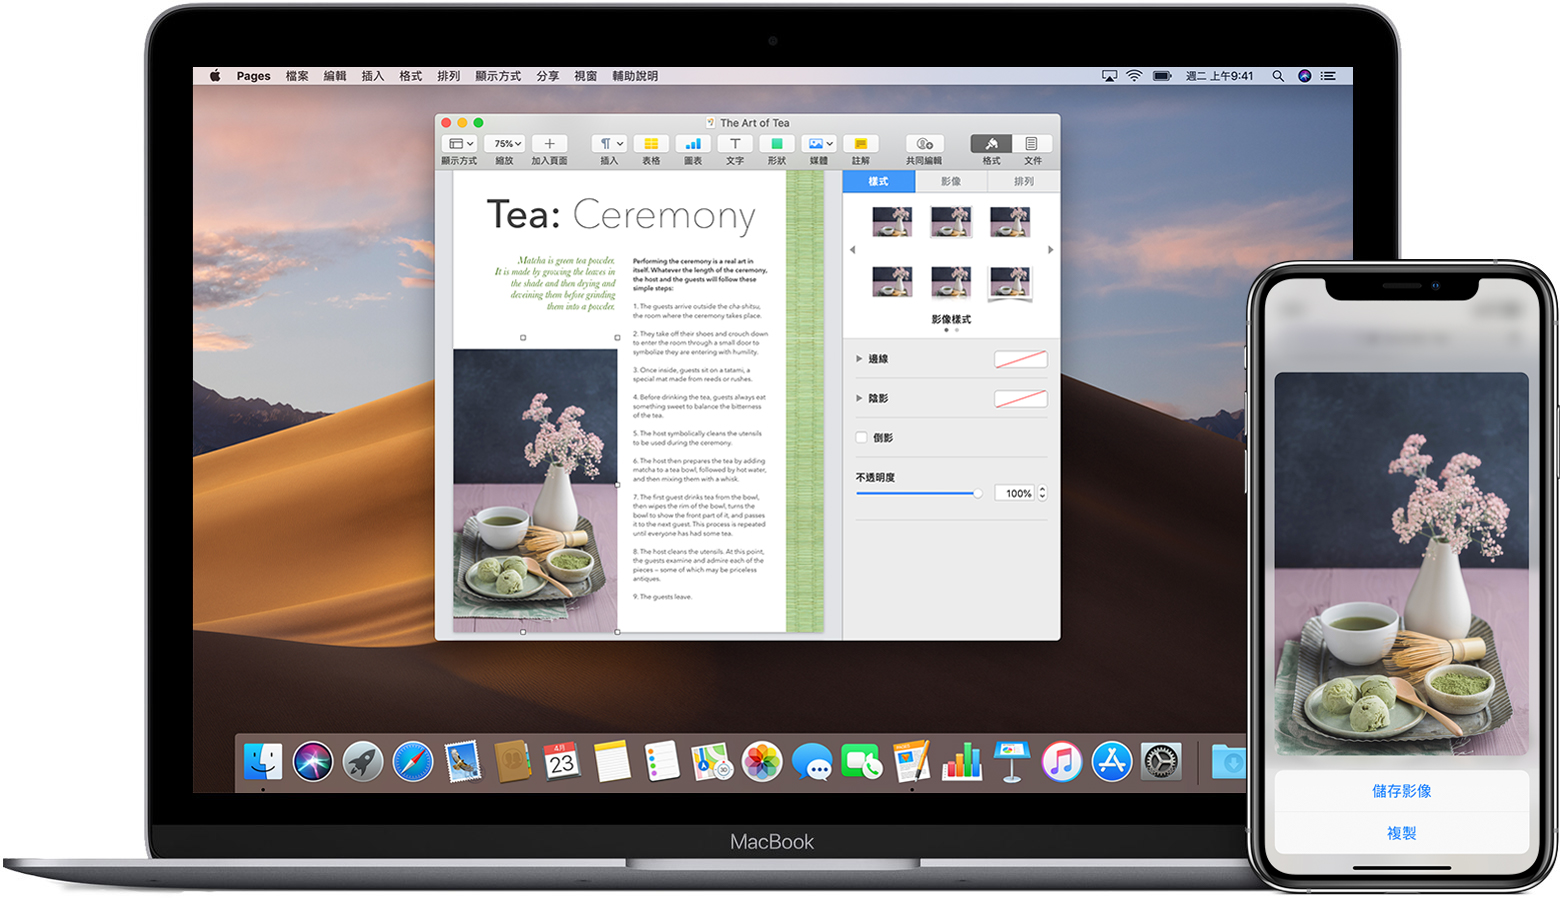 iPhone 正顯示有「複製」選項的影像，而 MacBook 上亦開啟了有同一影像的 Pages 文件。